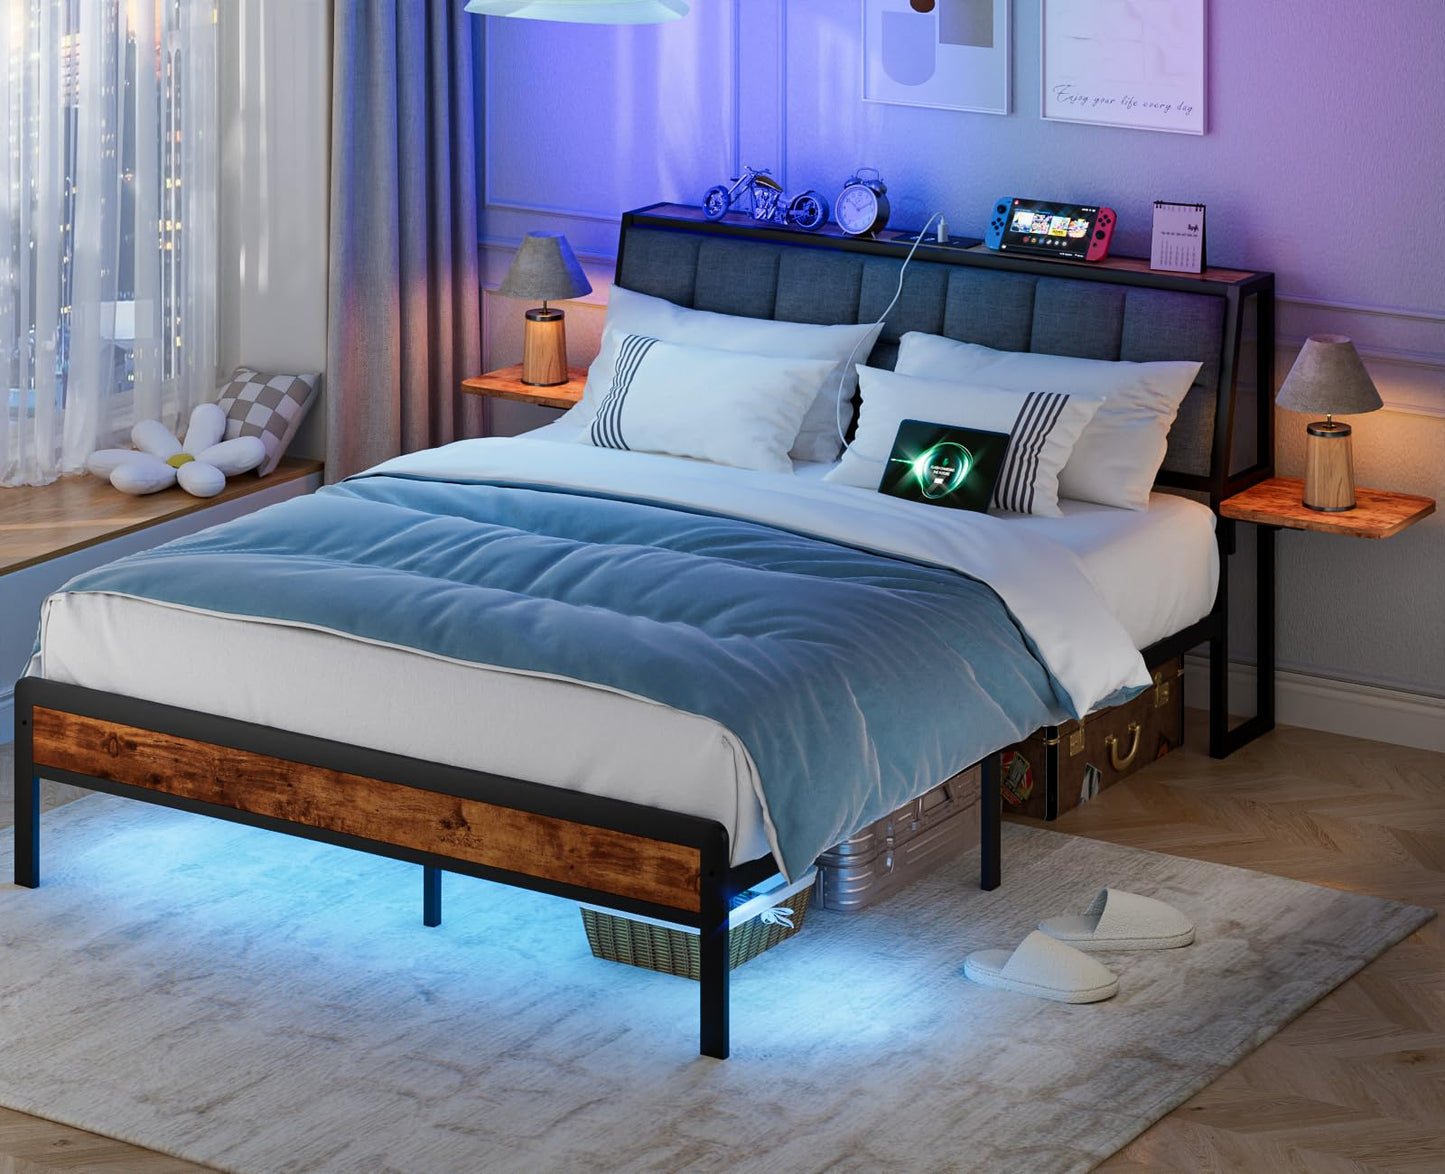 Furnulem Queen Size Bed Frame with RGB LED Lights,USB Port and Power Outlet,Upholstered Headboard Soft Backrest and Bedside Shelf,No Box Spring Needed